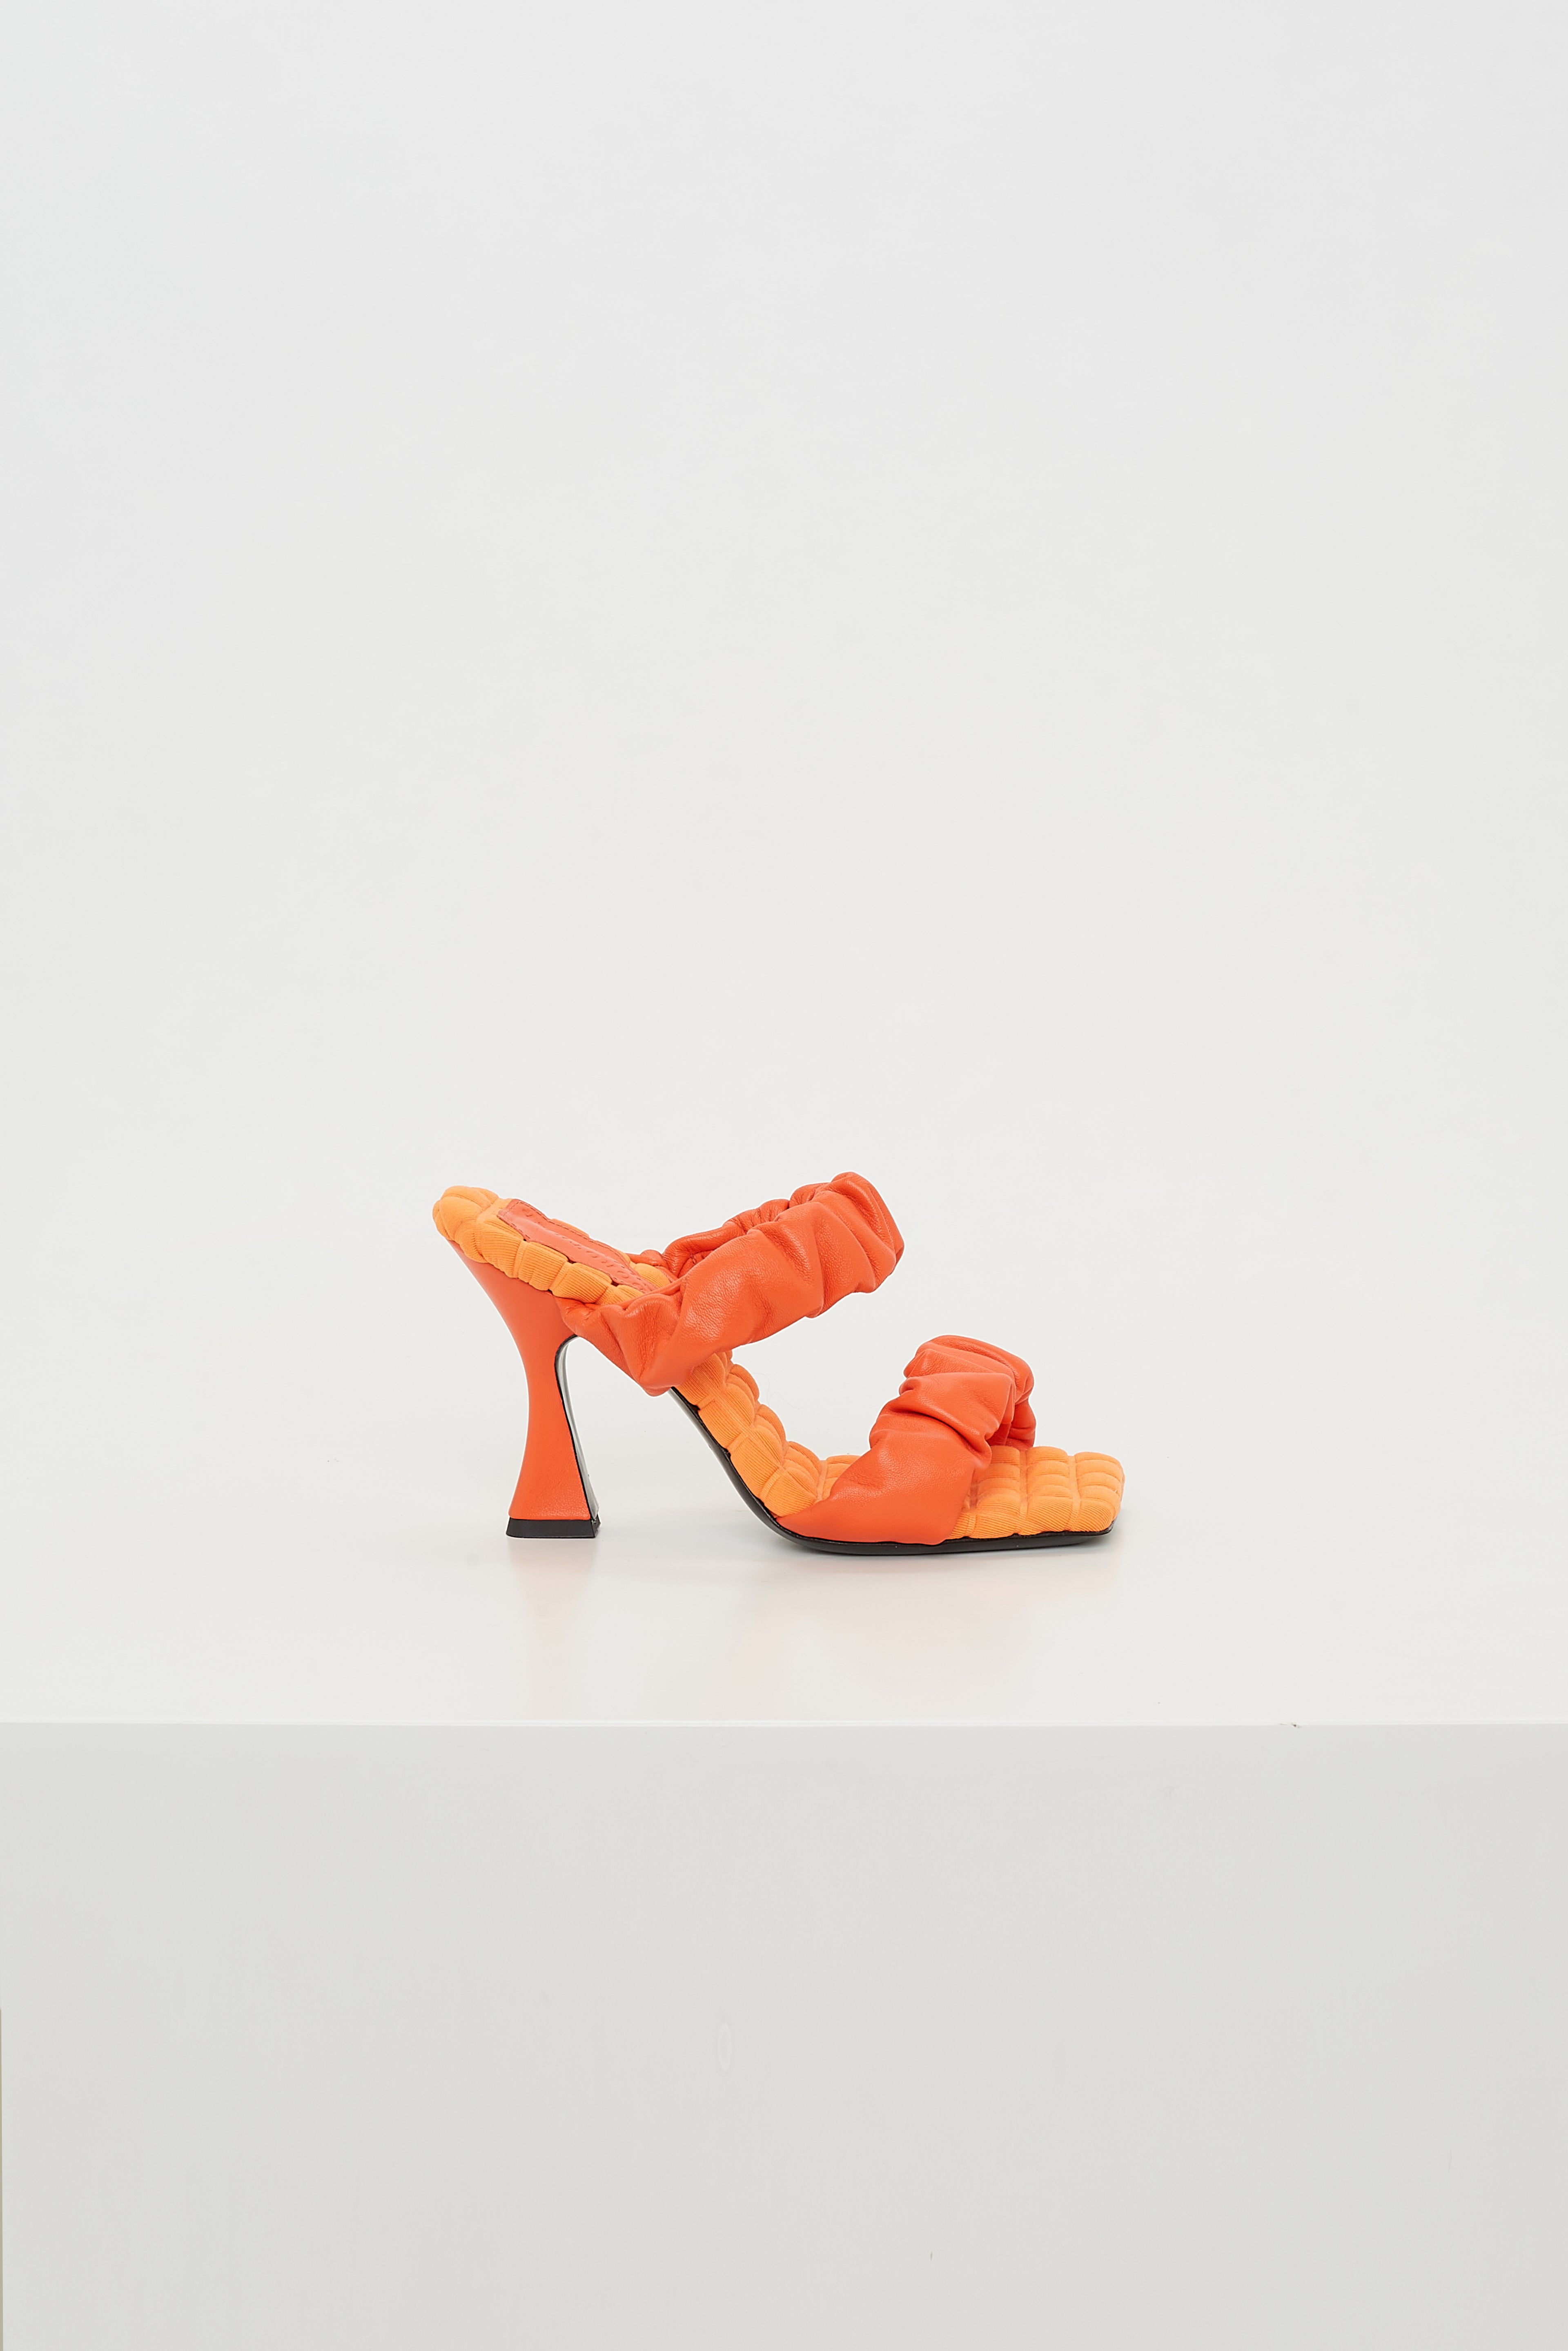 Dorothee-Schumacher-OUTLET-SALE-SPORTY-FEMININITY-sandal-heeled-Sandalen-ARCHIVE-COLLECTION-2.jpg